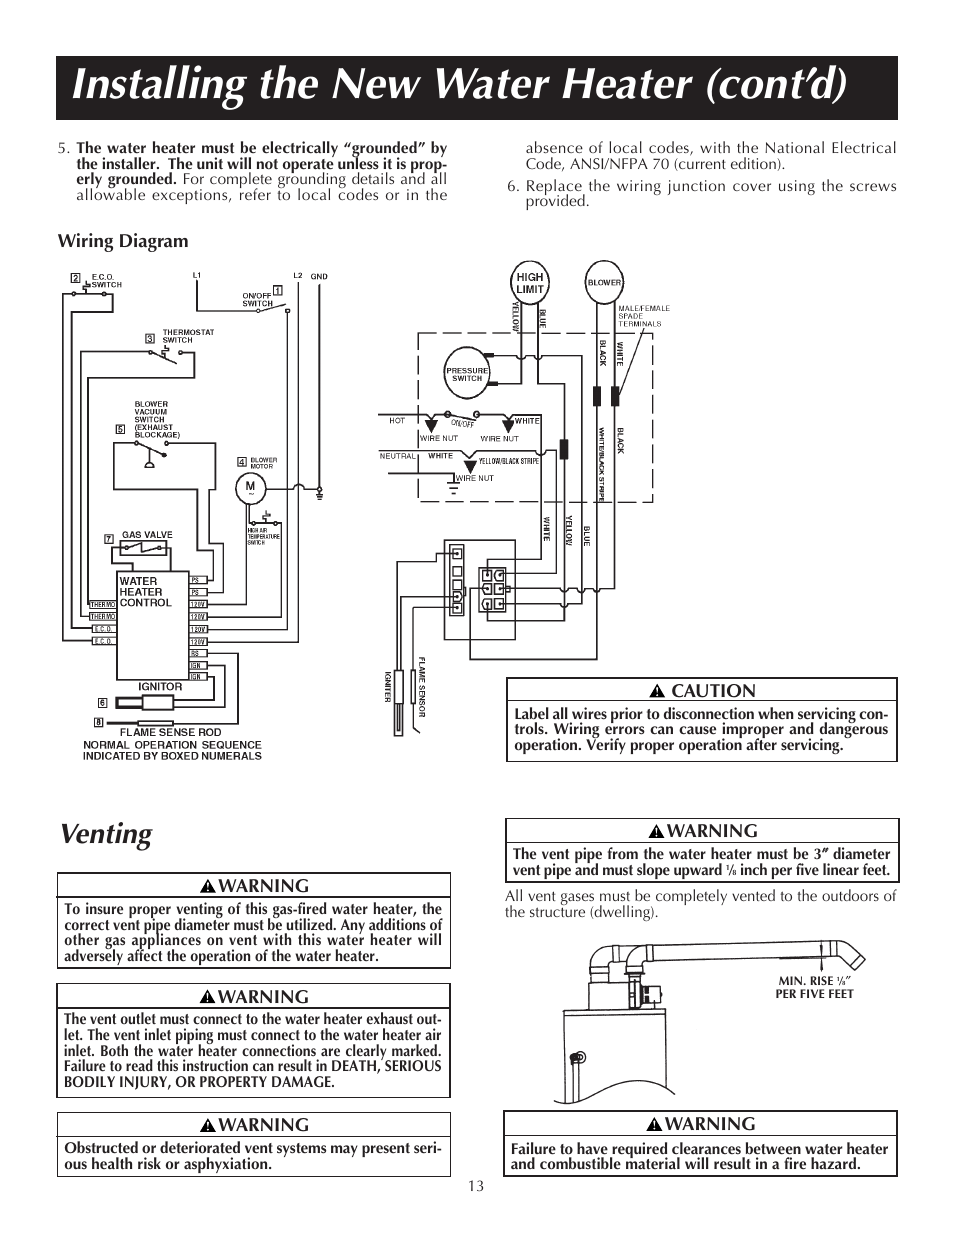 Wiring Diagram Reliance 501 Hot Water Heater from www.manualsdir.com